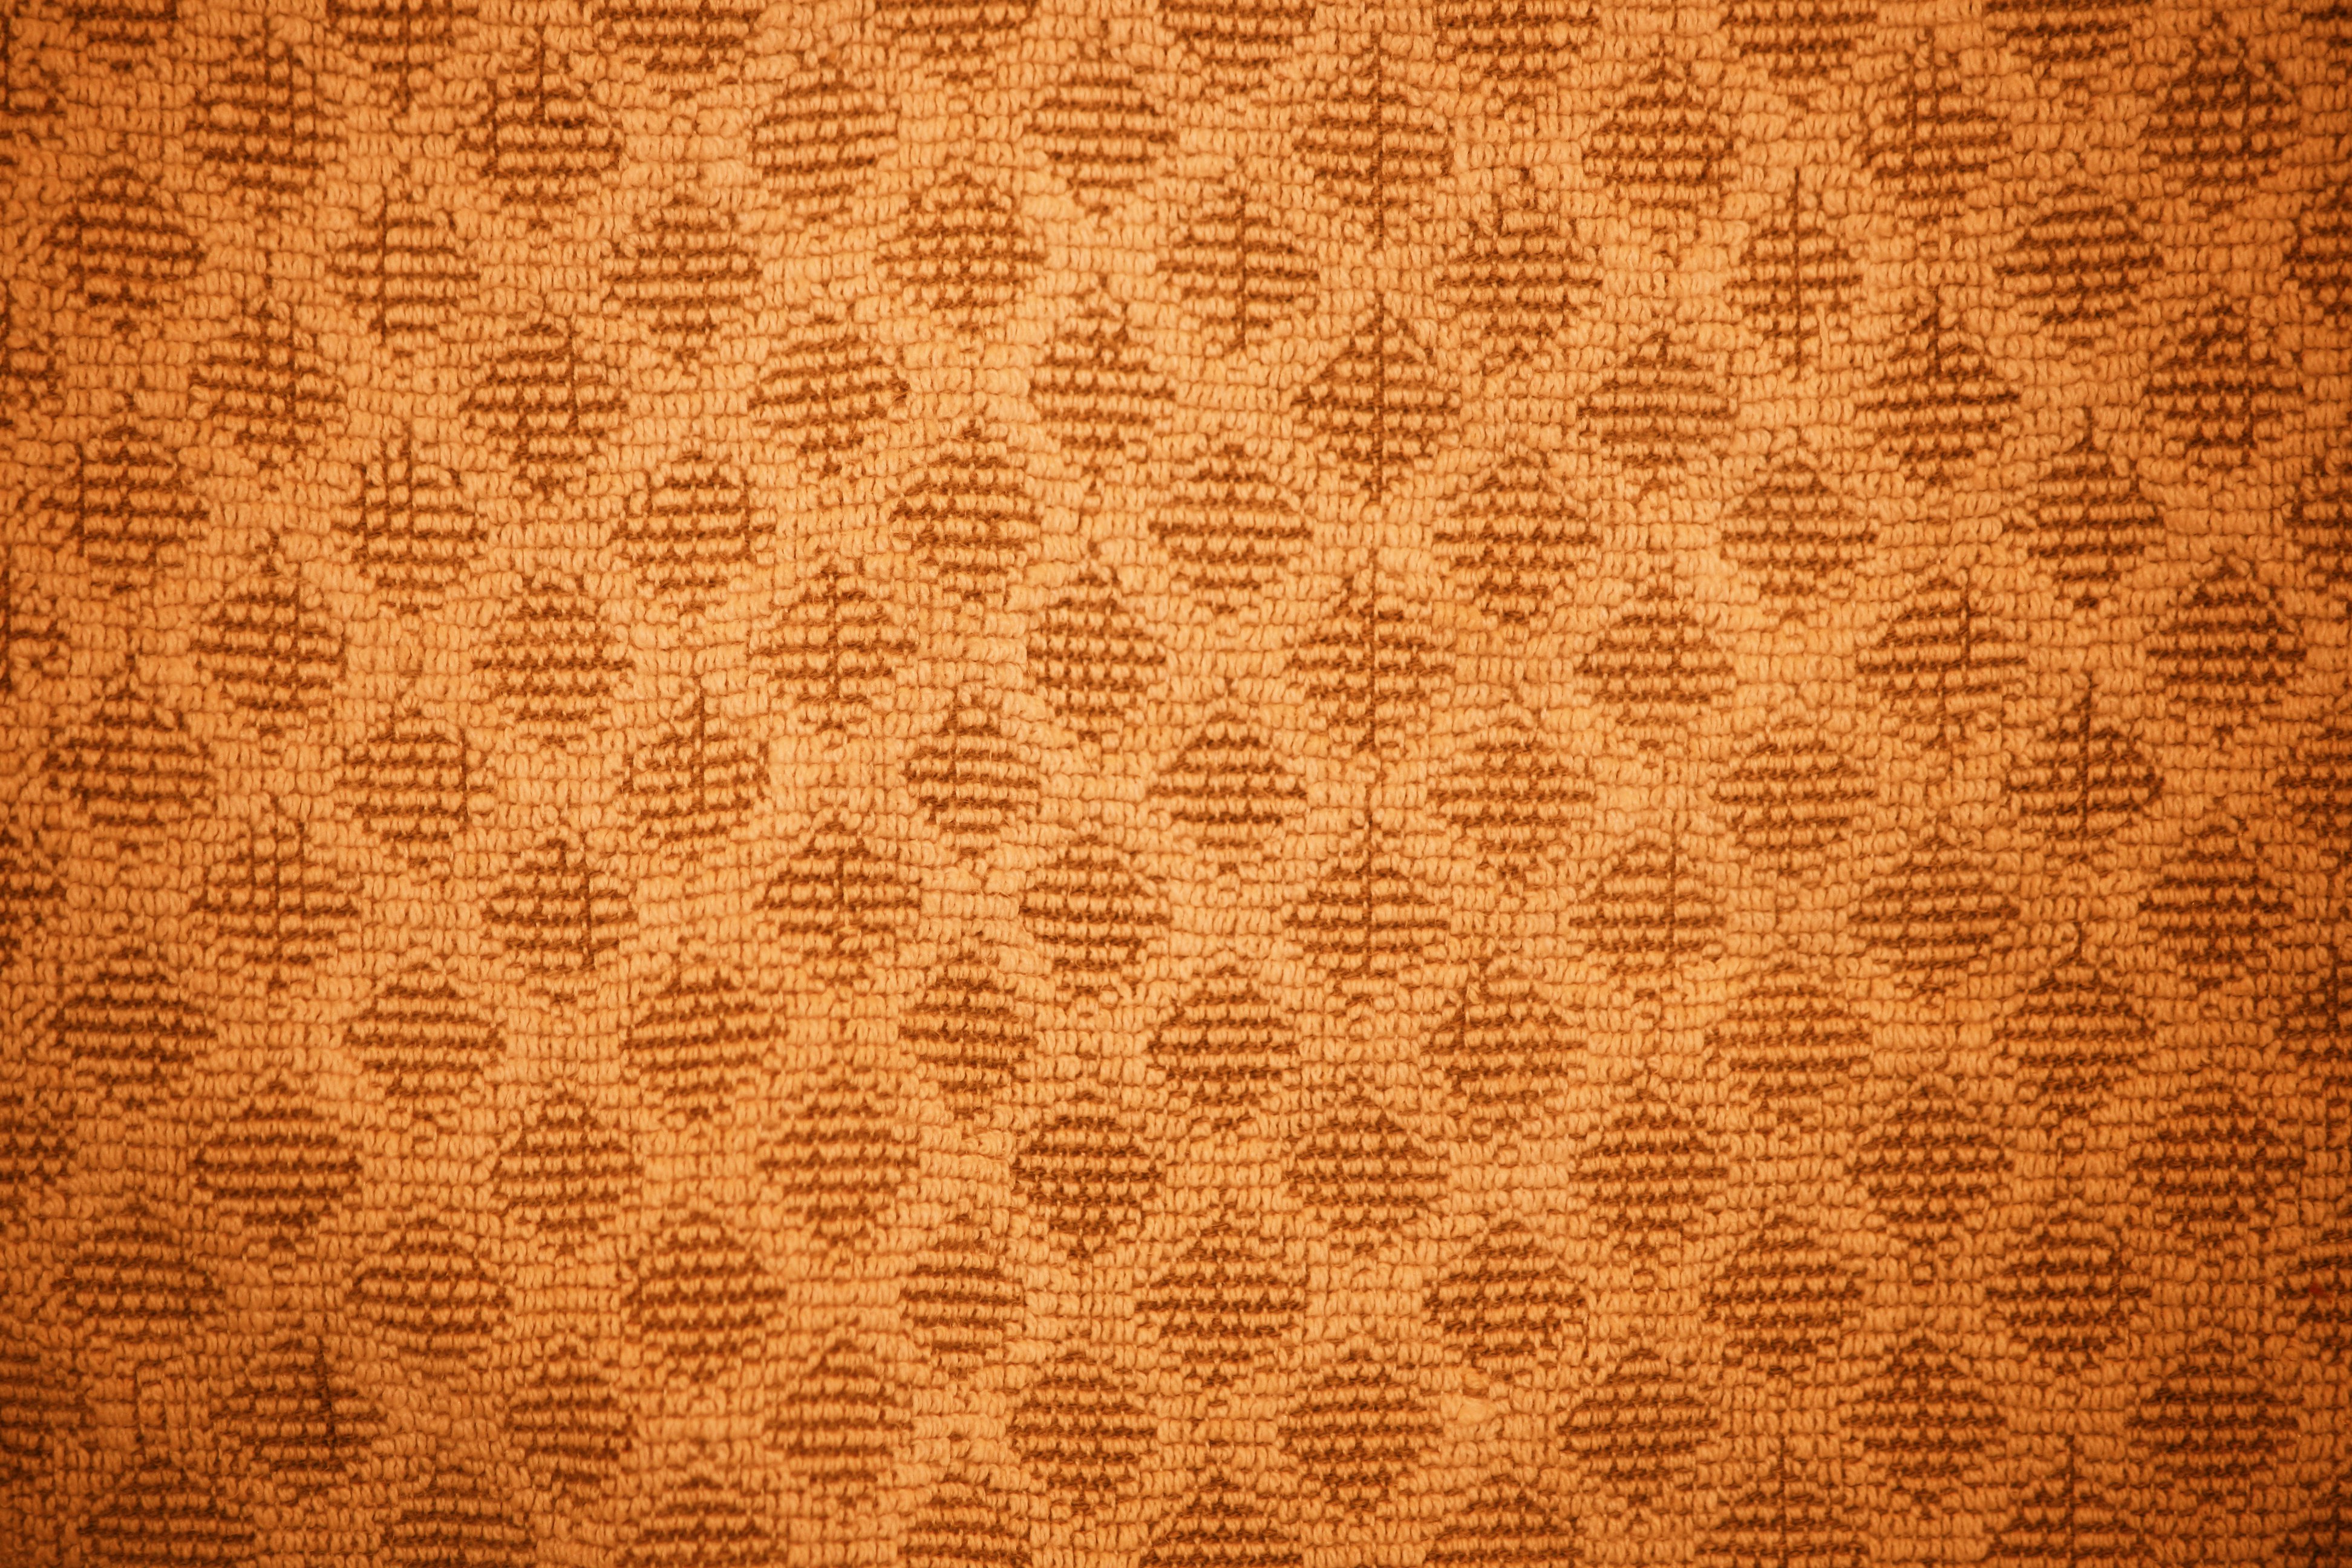 https://www.photos-public-domain.com/wp-content/uploads/2012/05/orange-dish-towel-with-diamond-pattern-texture.jpg